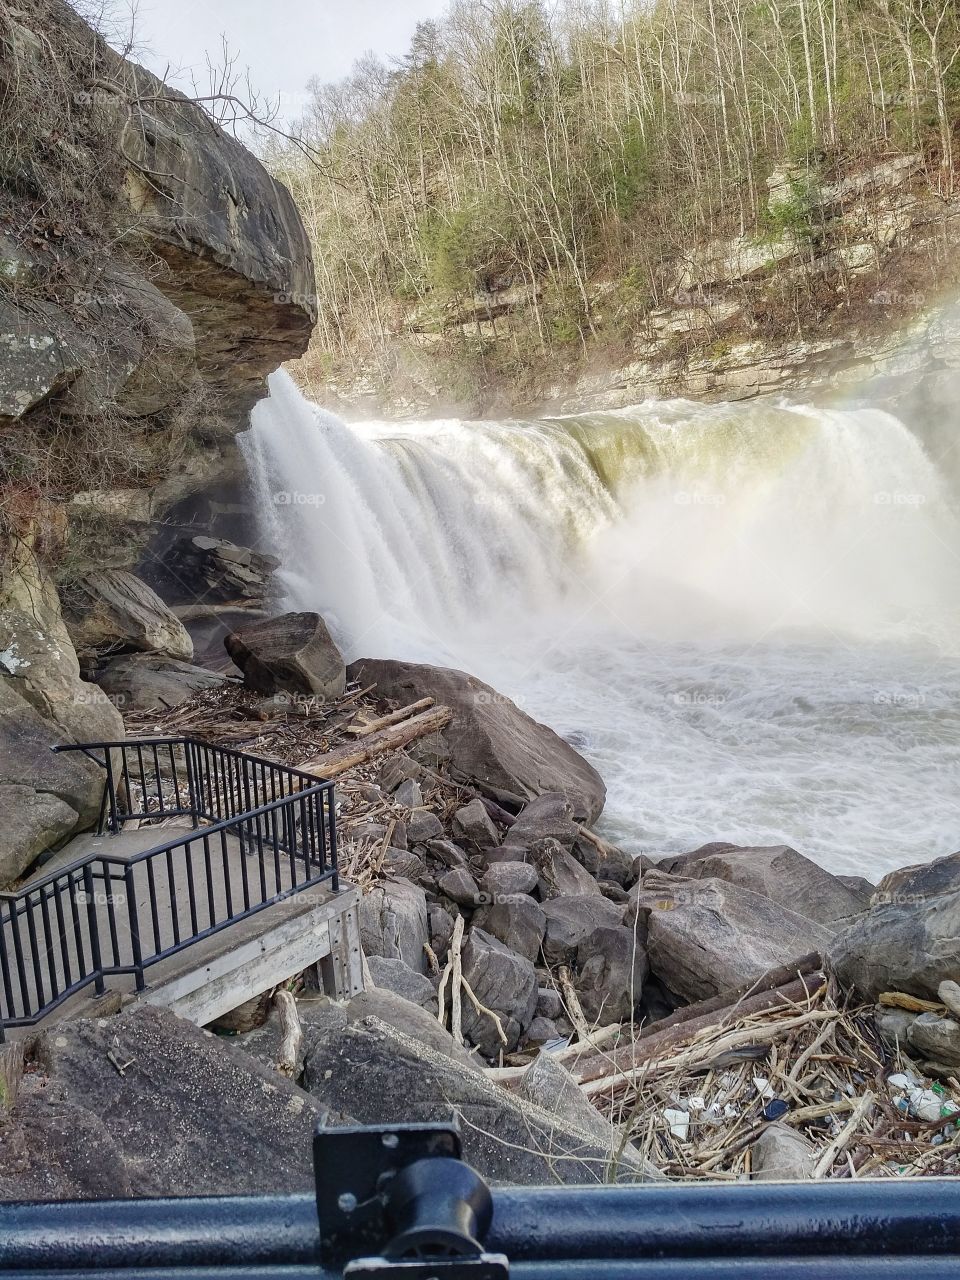 Cumberland falls